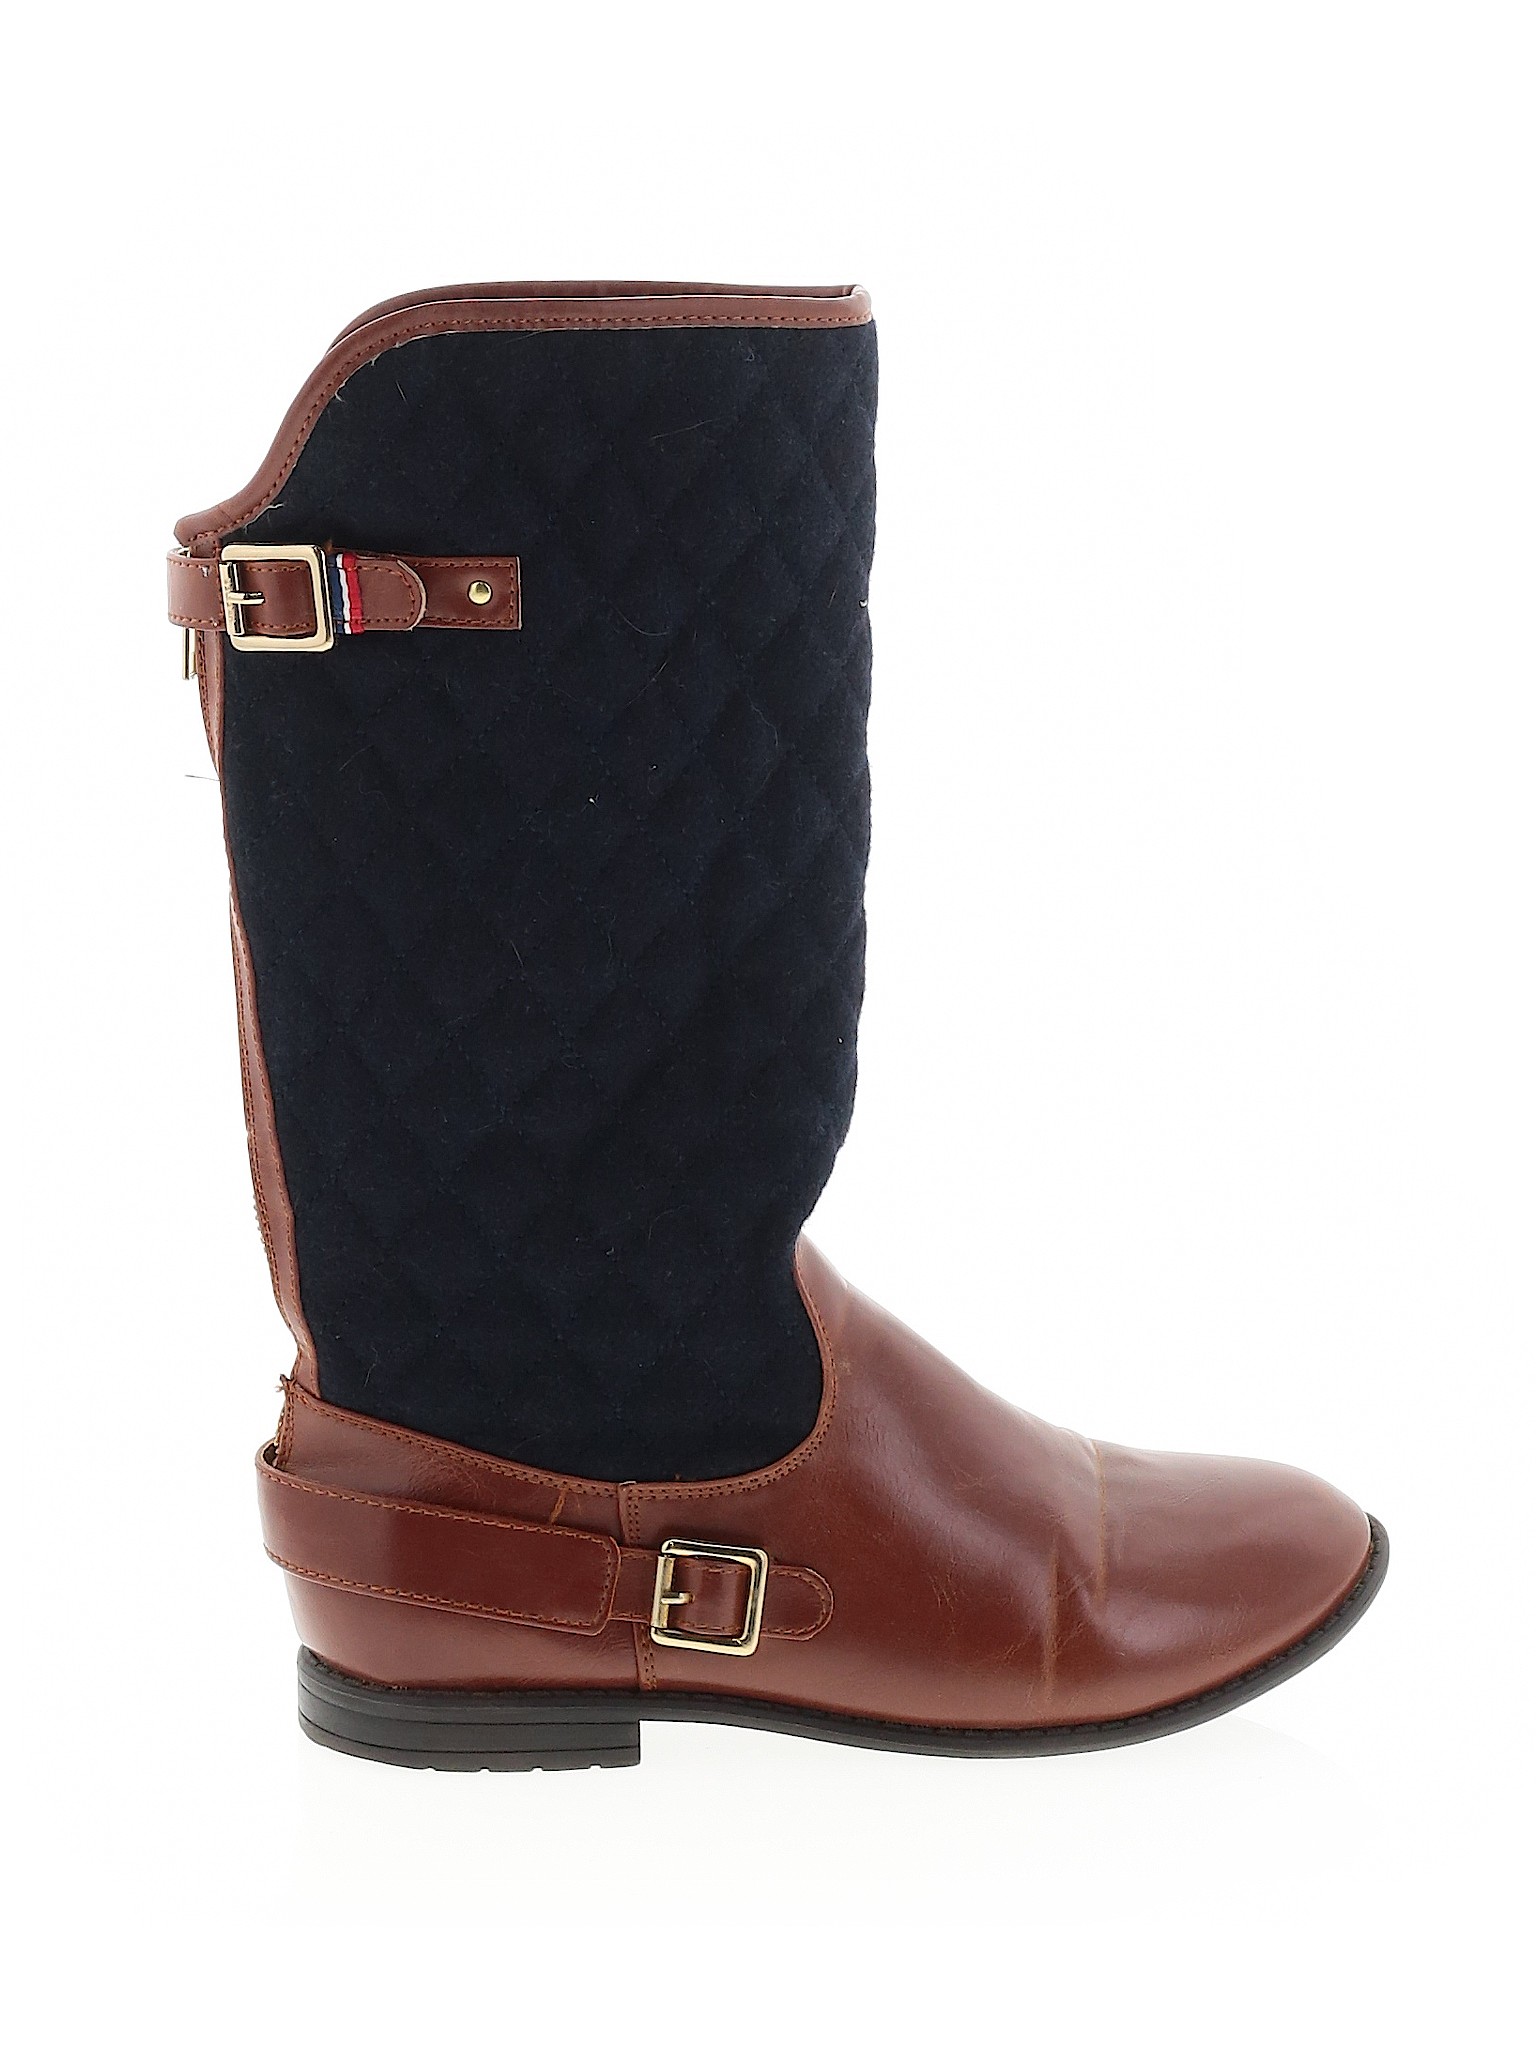 Tommy Hilfiger Women Brown Boots US 5 | eBay